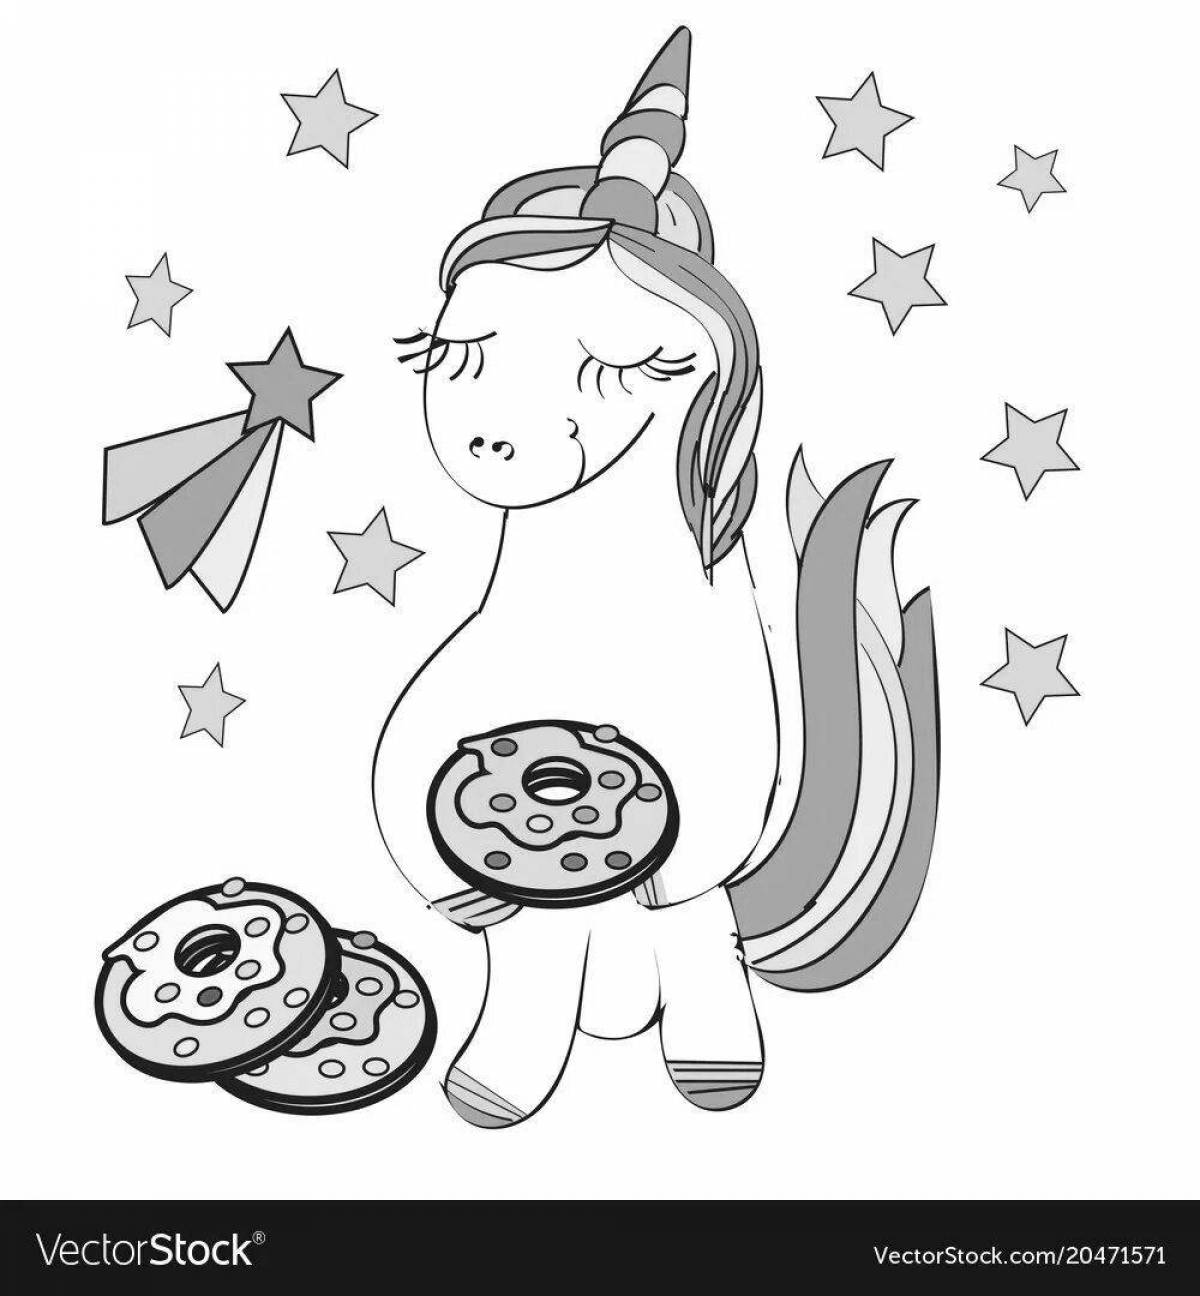 Cute unicorn donut coloring book